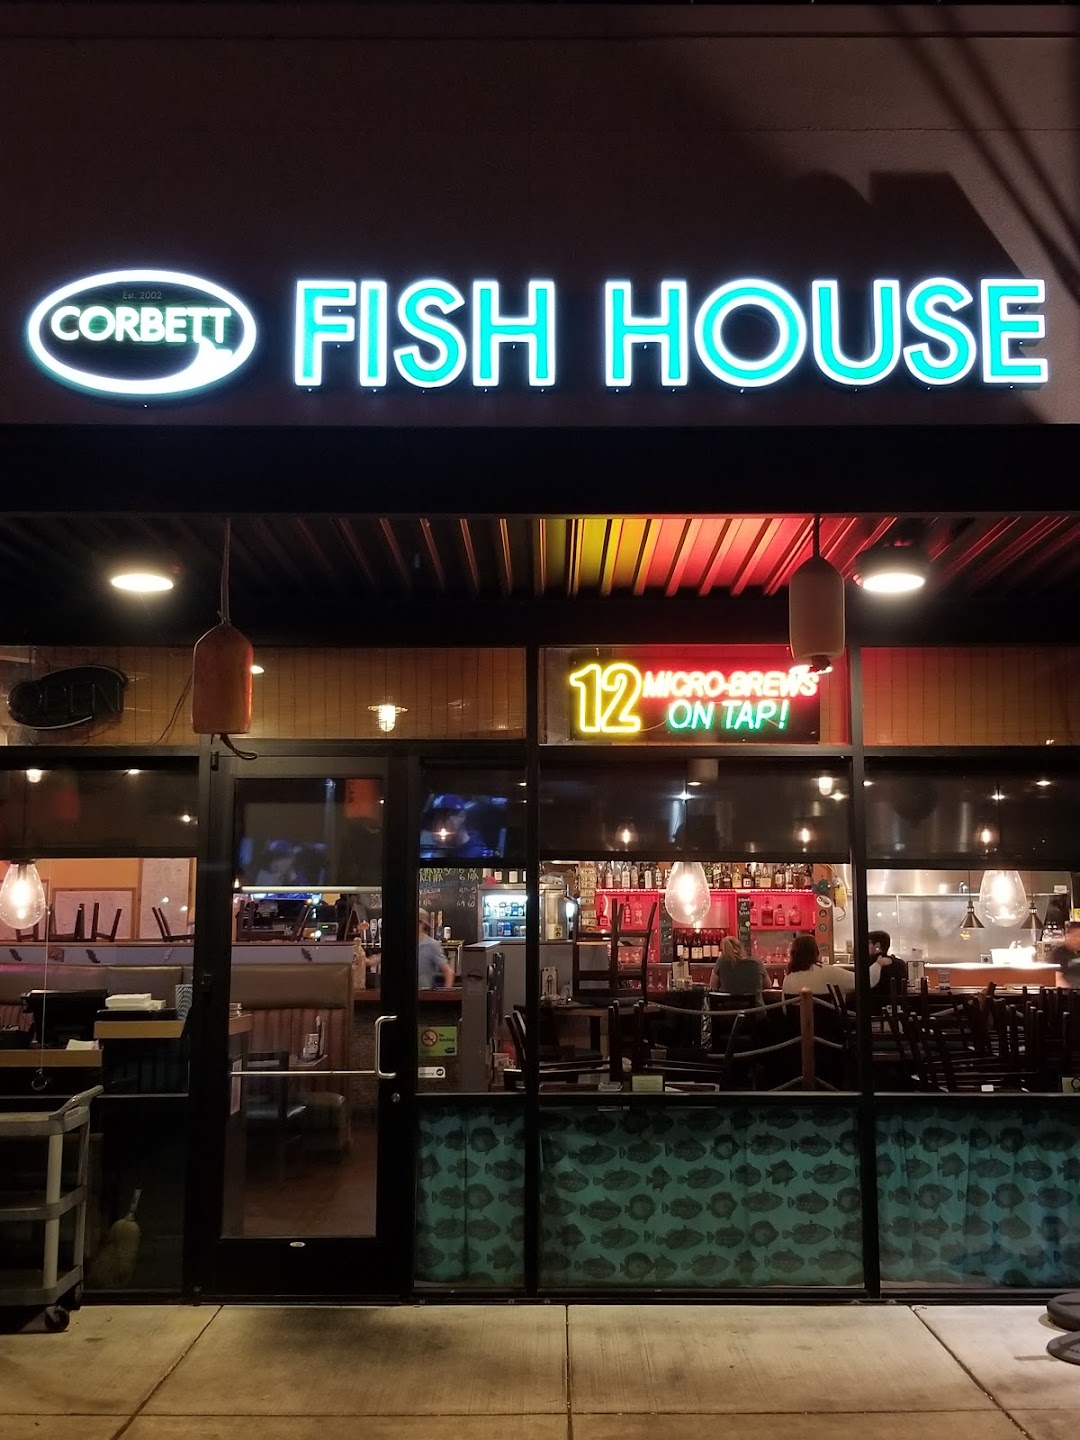 Corbett Fish House- East Vancouver